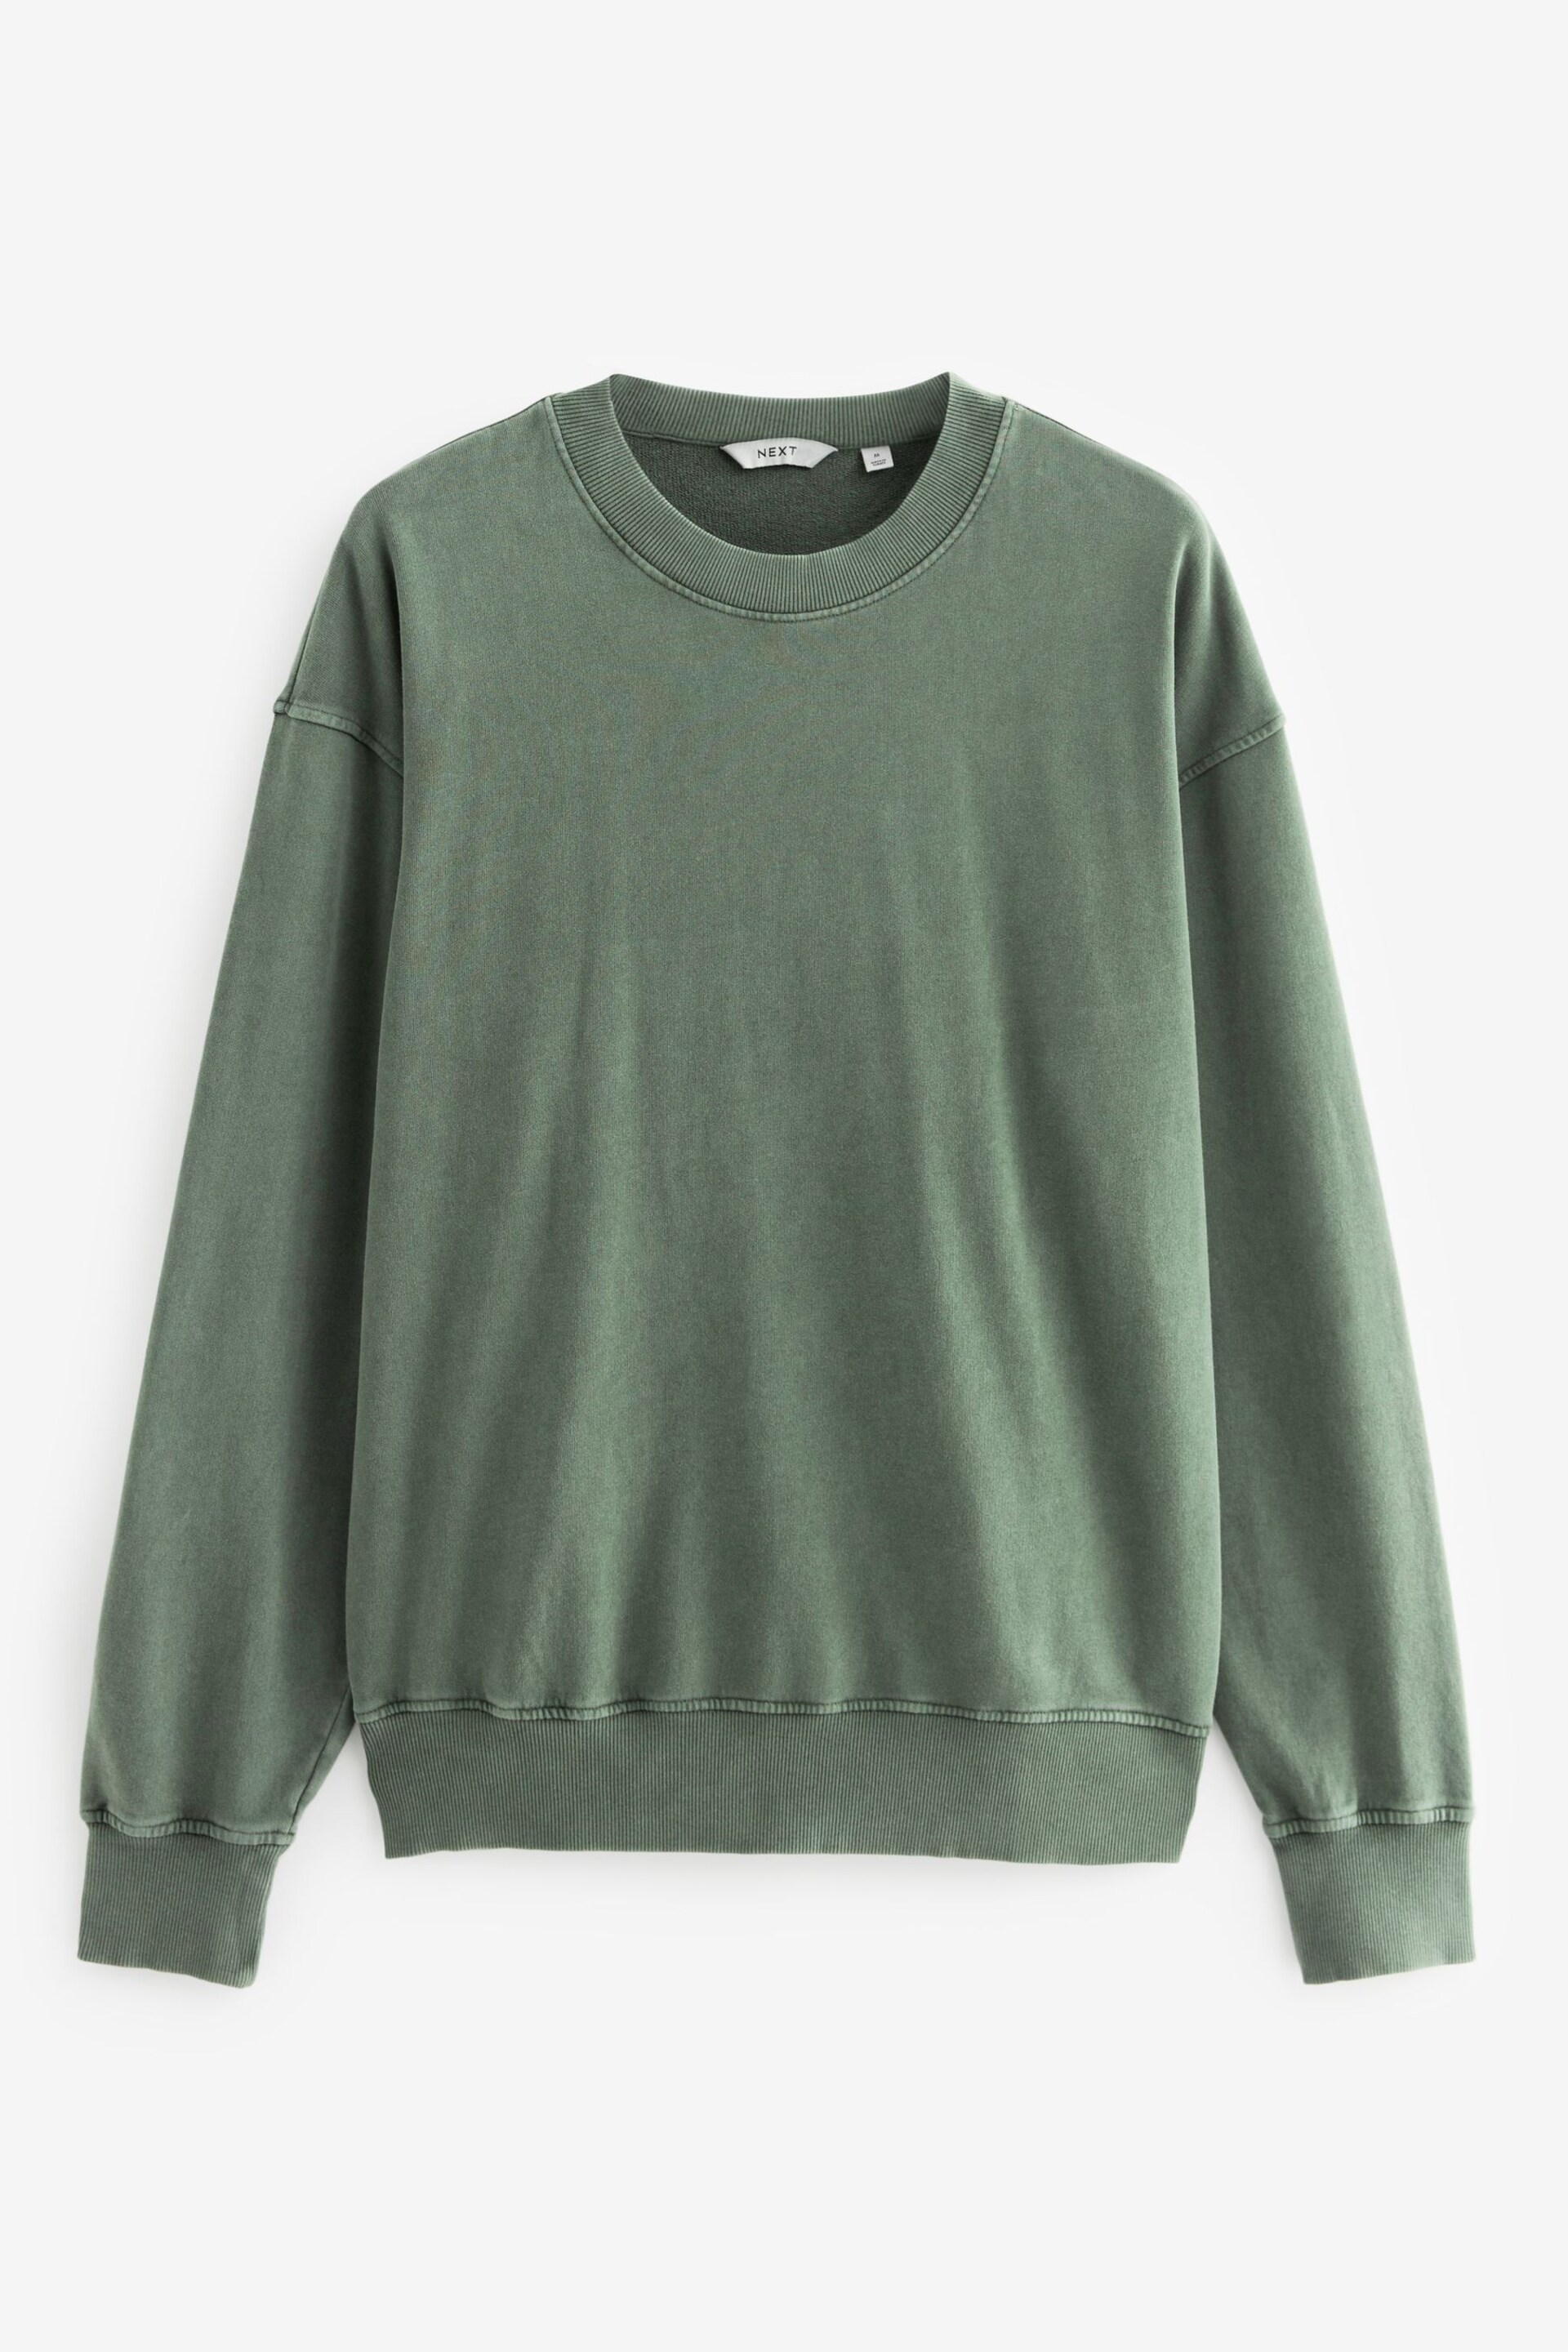 Khaki Green Oversized Garment Wash Sweatshirt - Image 6 of 8